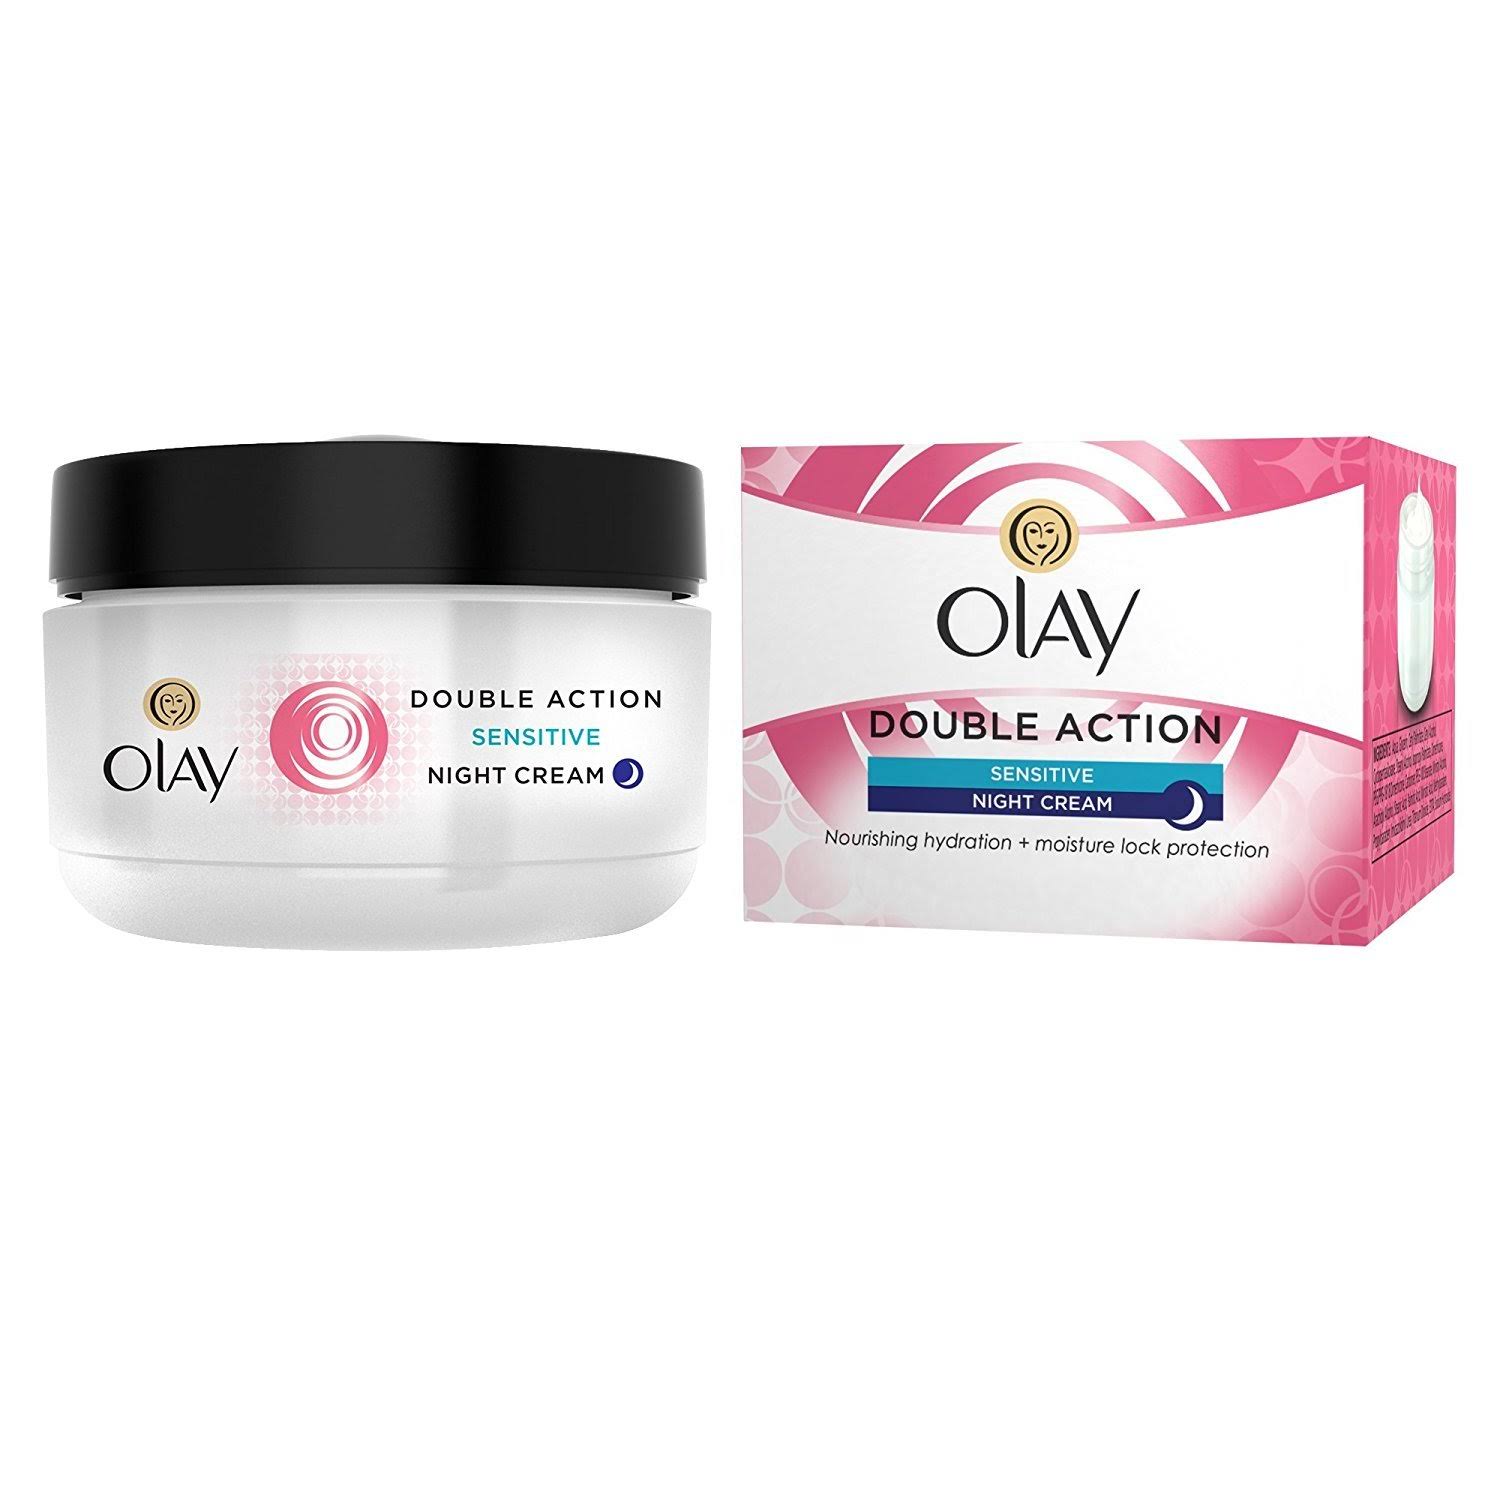 Olay Double Action Night Cream - Sensitive, 50ml